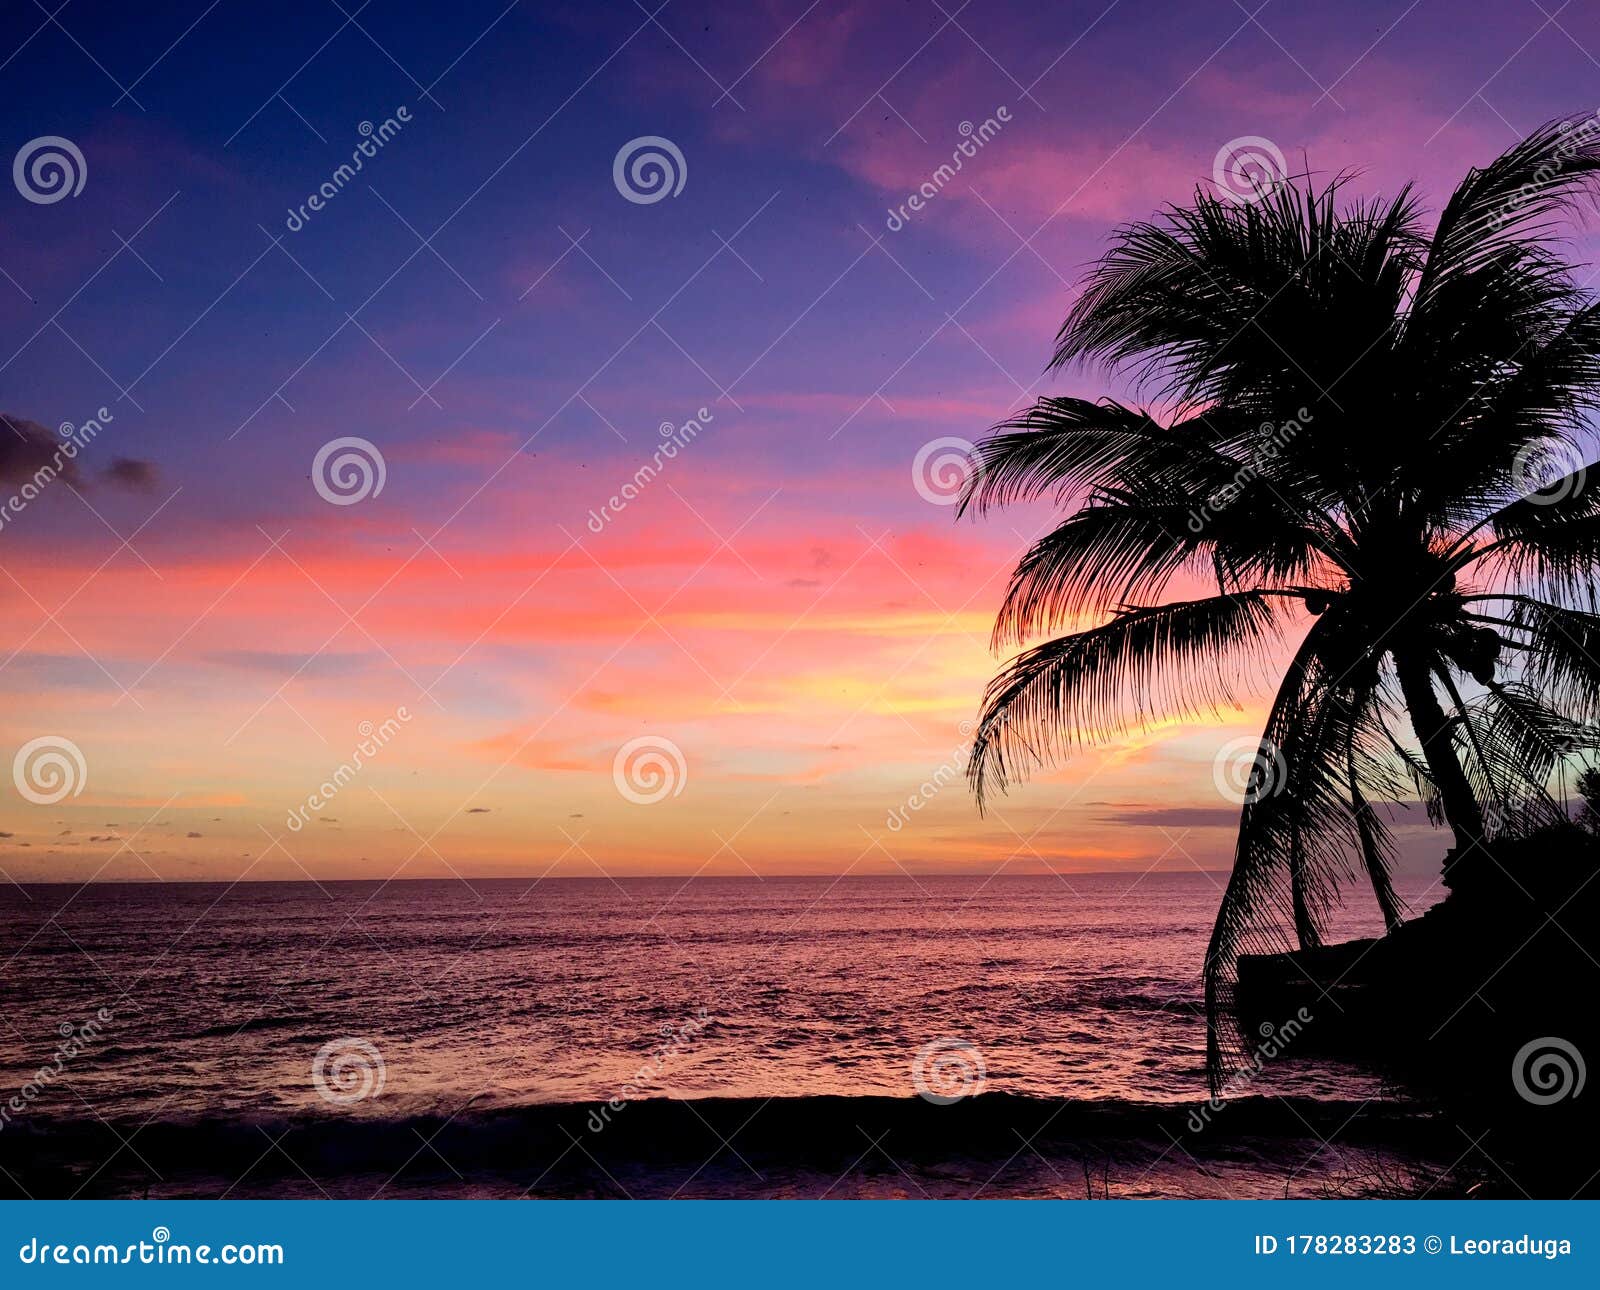 Palm Tree Wallpaper Images  Free Download on Freepik